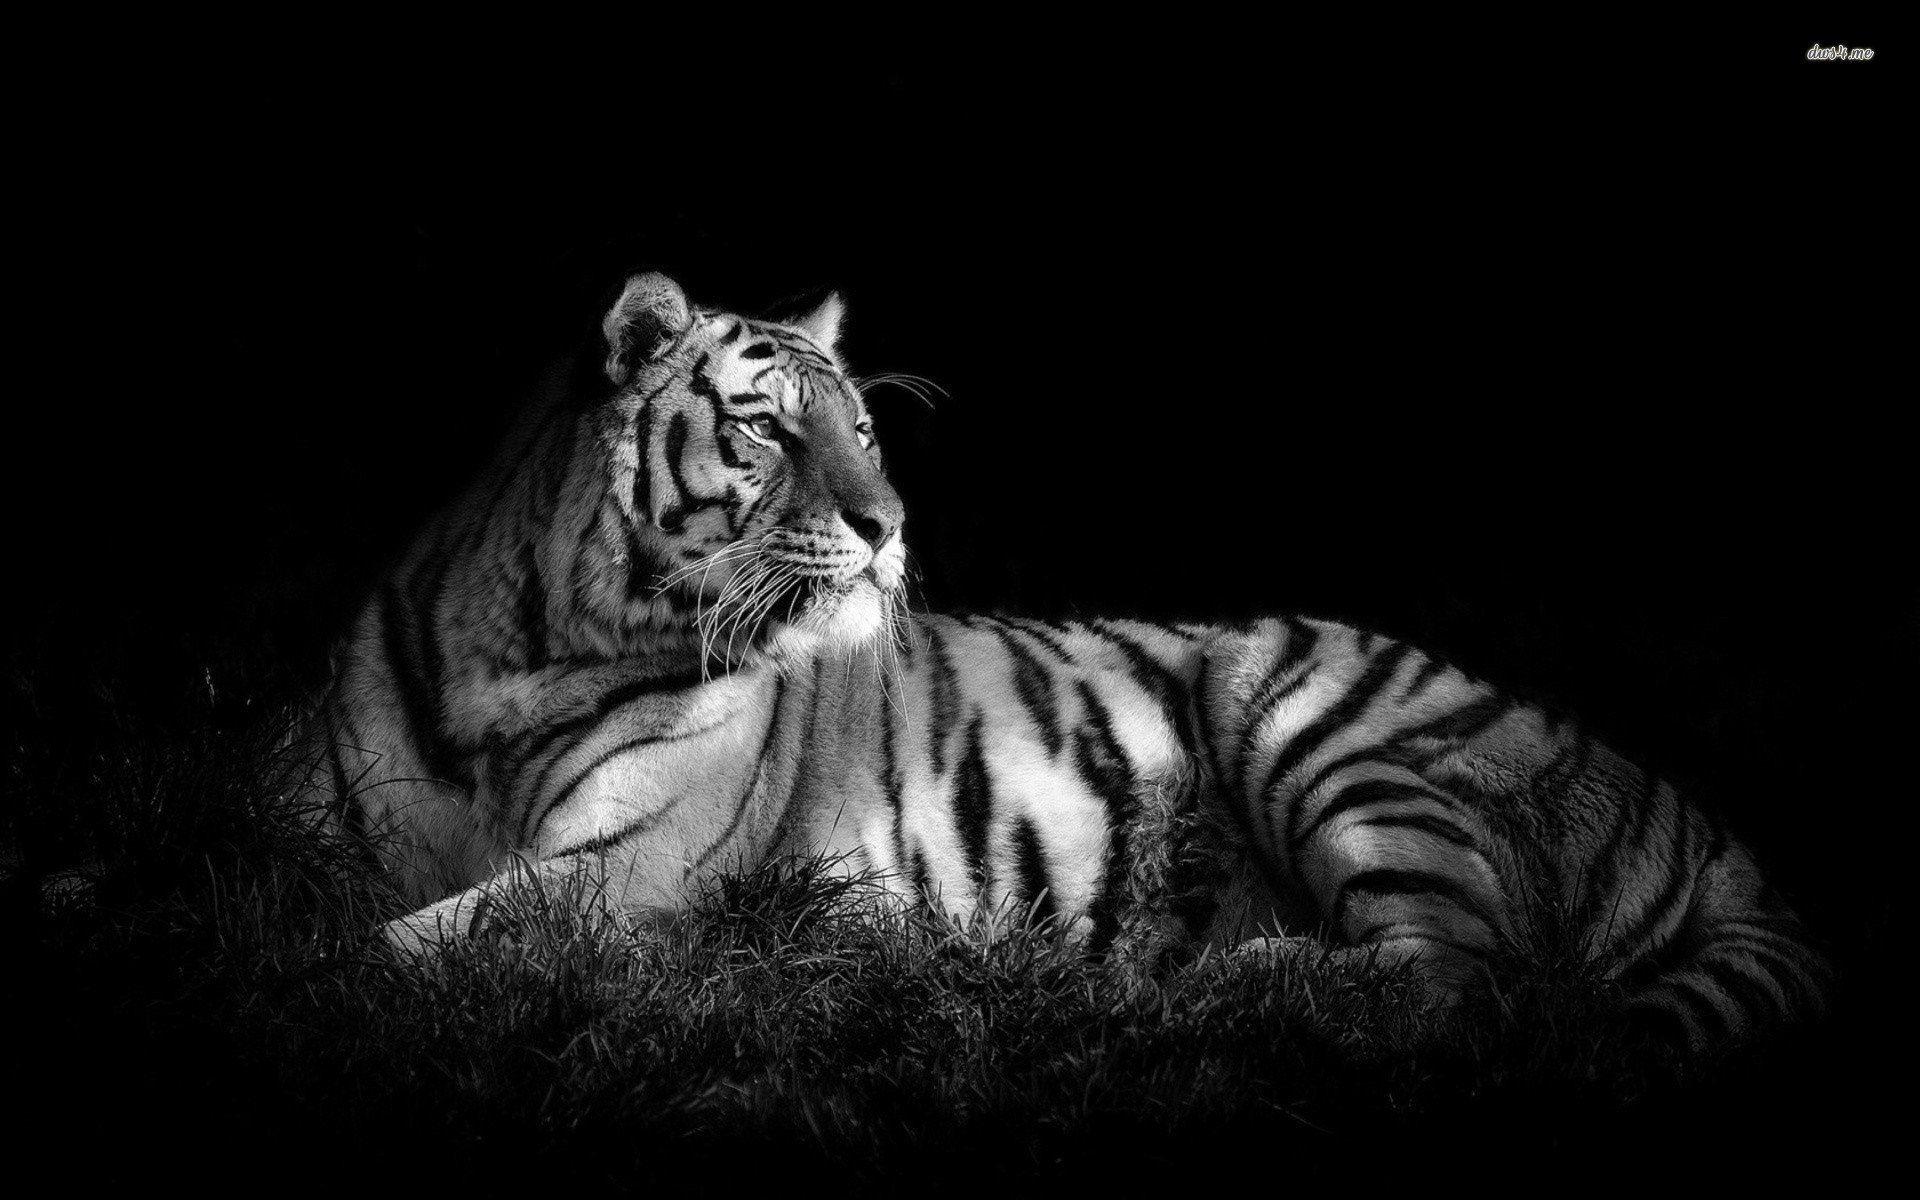 Black and White Tiger wallpaper. Tiger wallpaper, White tiger picture, White tiger